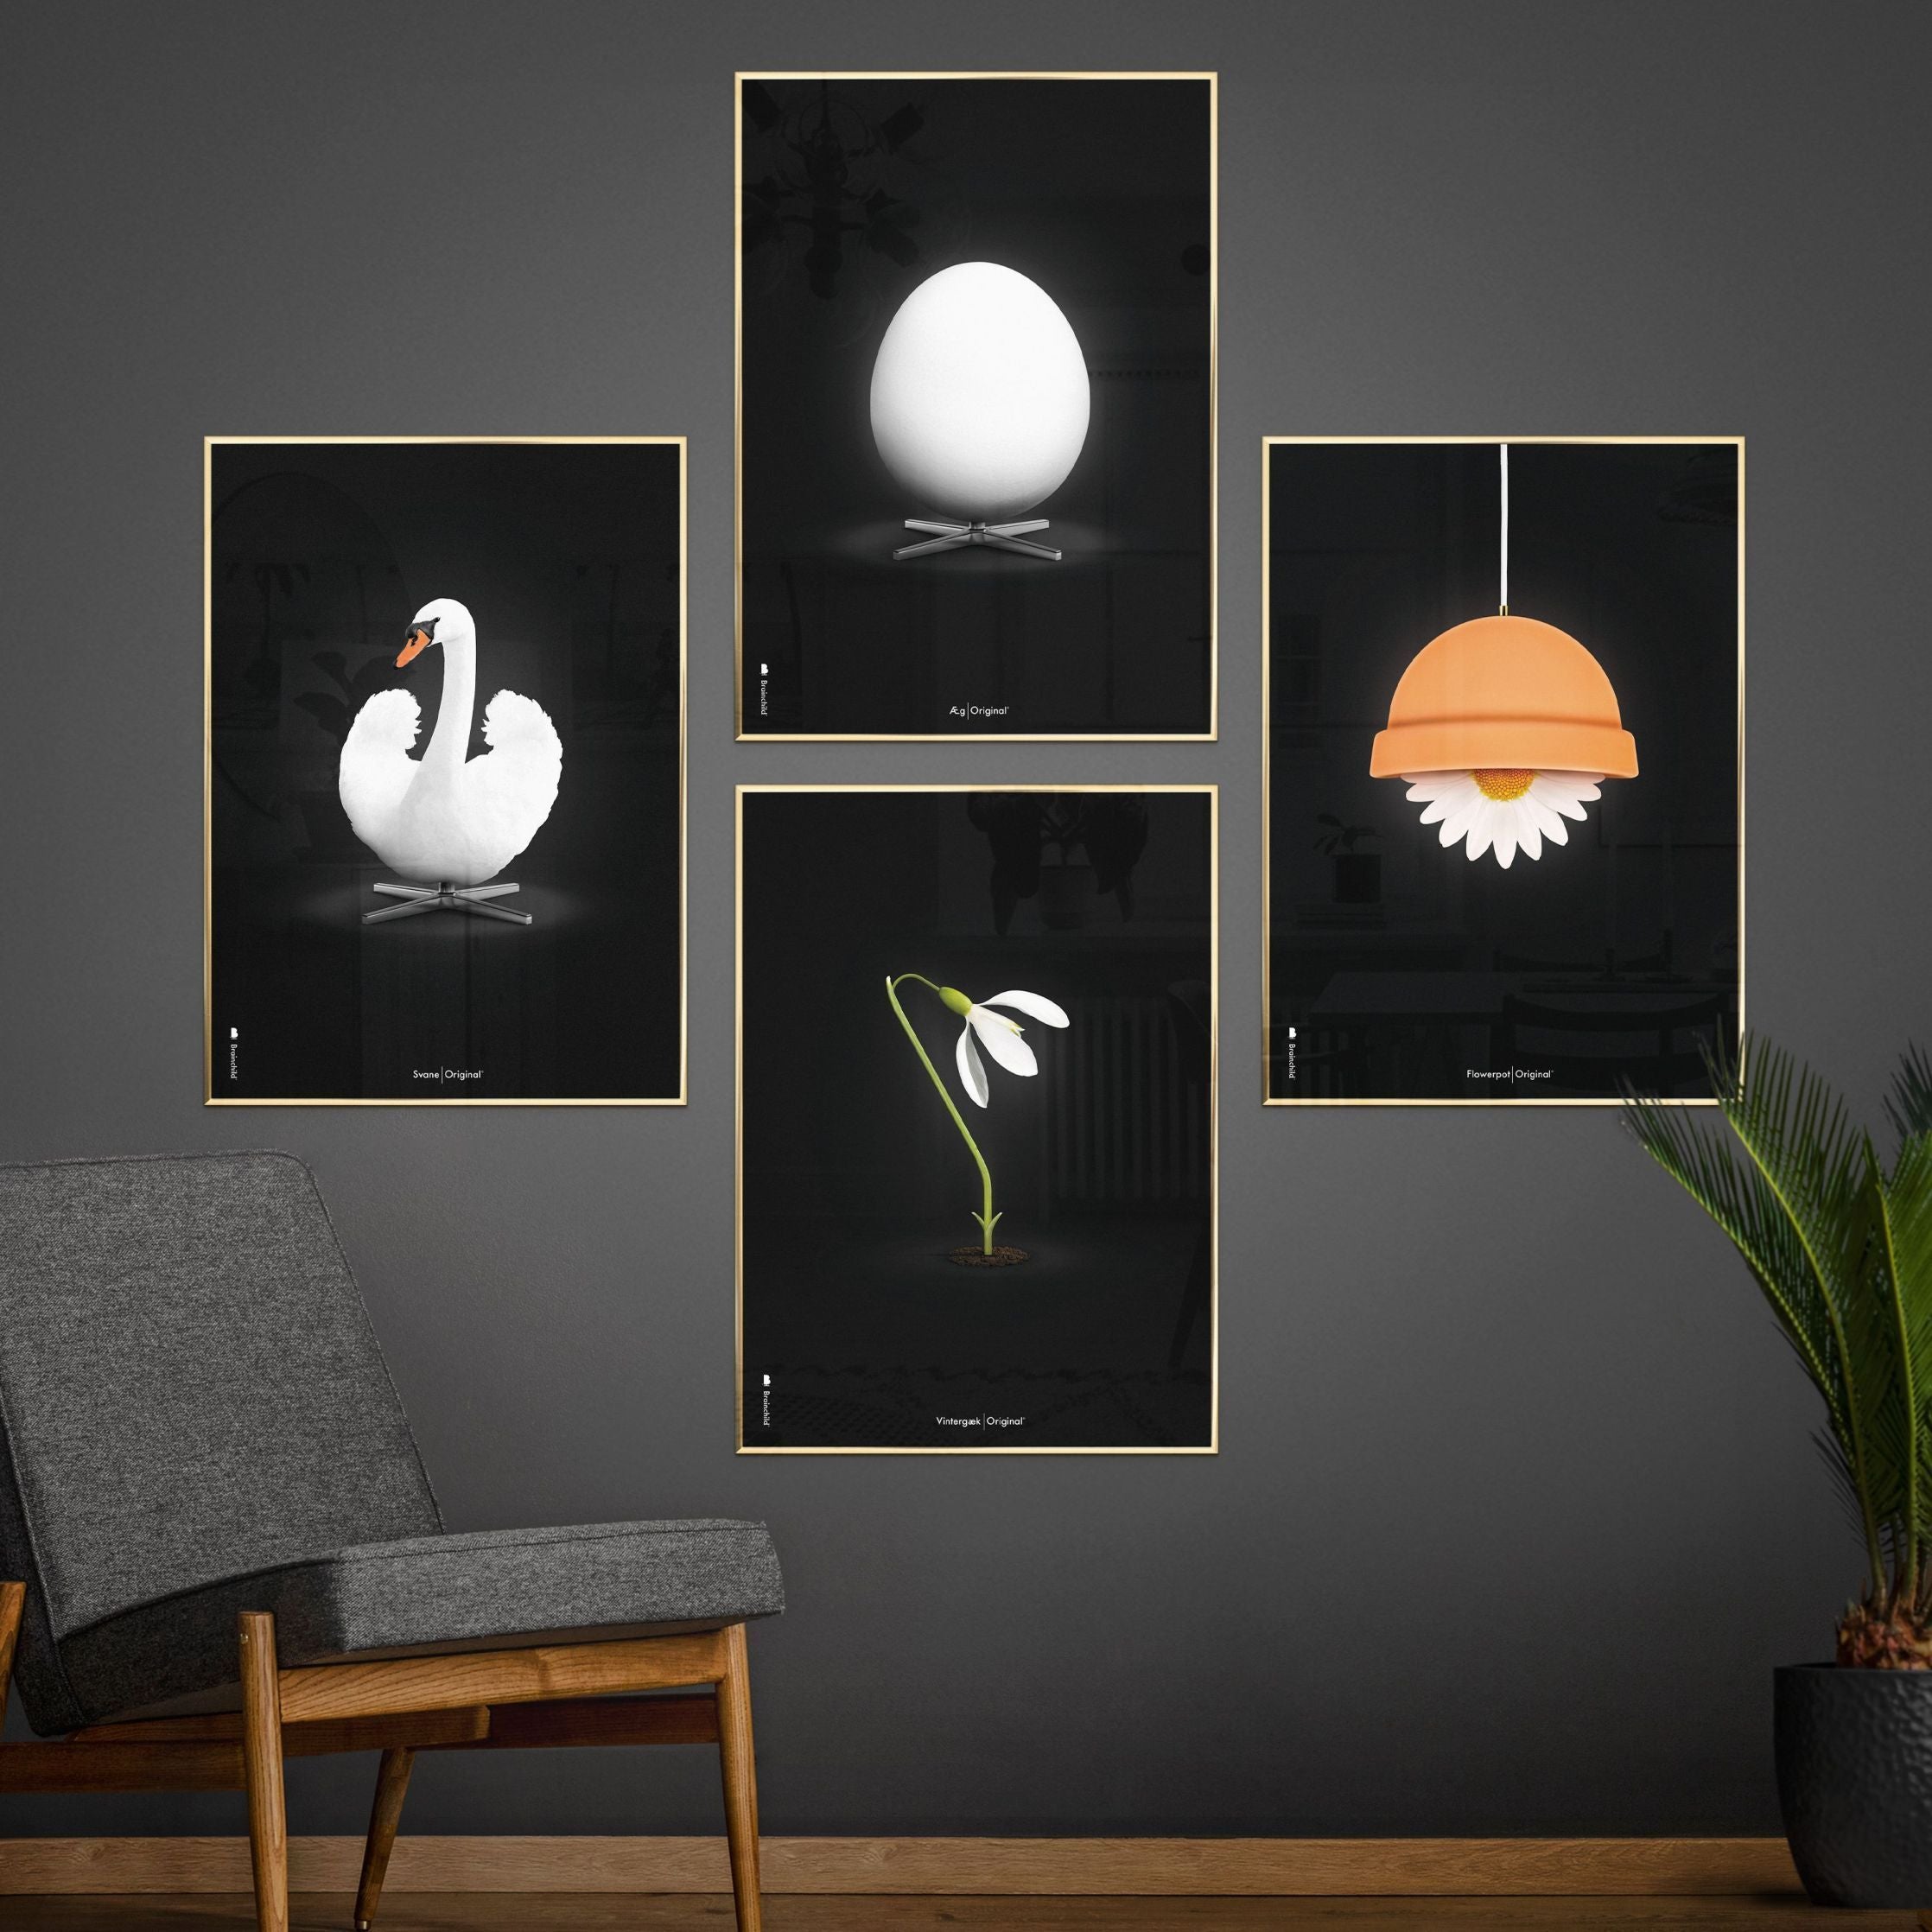 Brainchild Egg Classic Poster, Frame Made Of Light Wood 30x40 Cm, Black Background